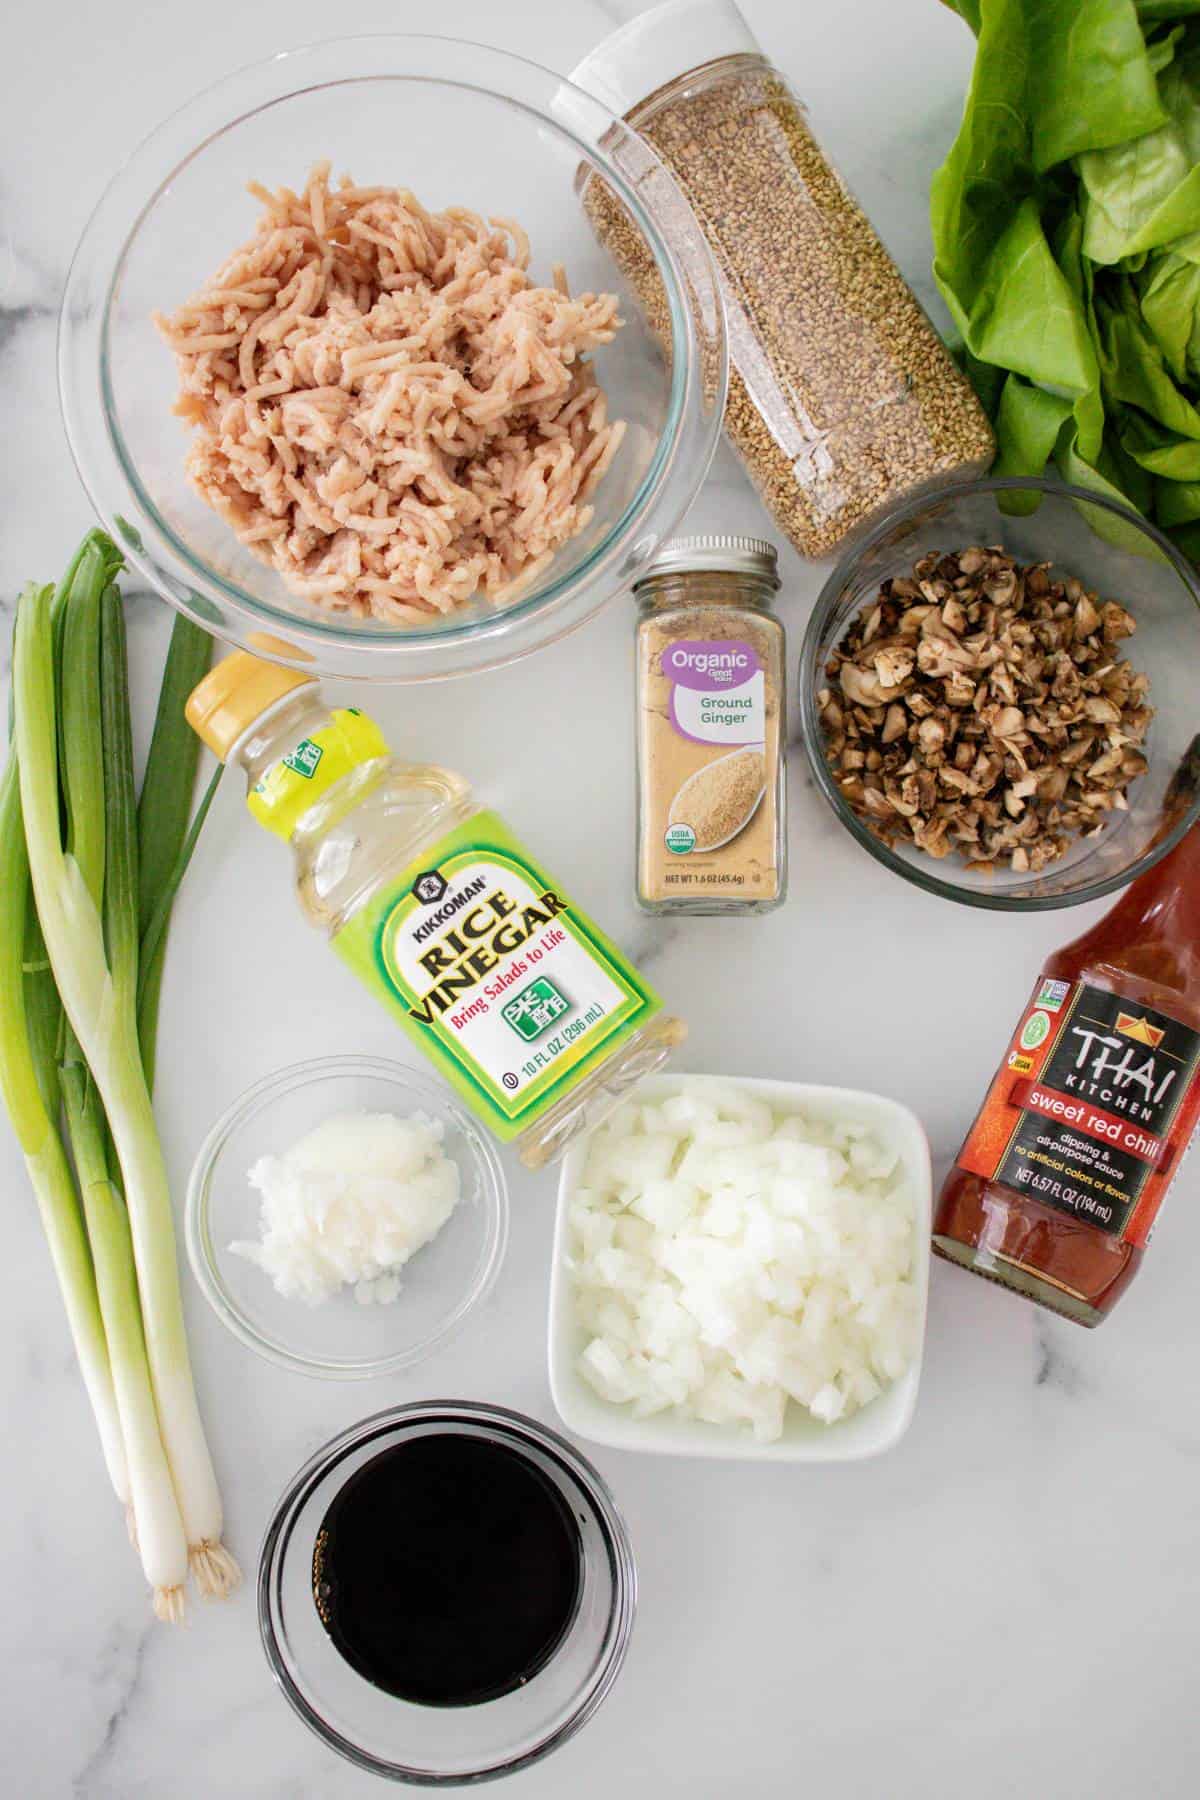 Ingredients to make chicken lettuce wraps. 